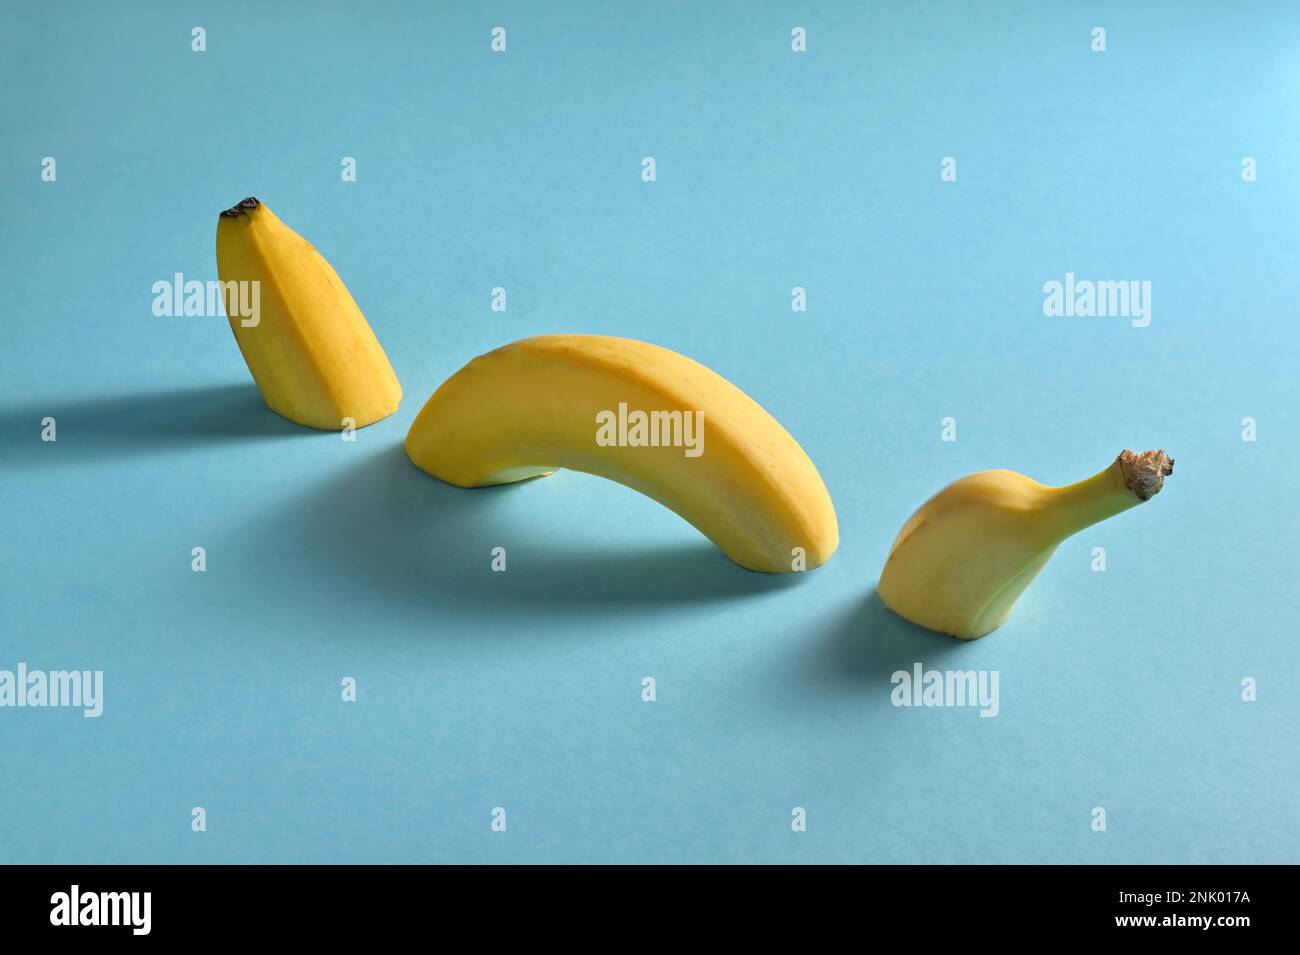 Abstract Sliced Banana like an Marine Animal Isolated On Blue Background Stock Photo